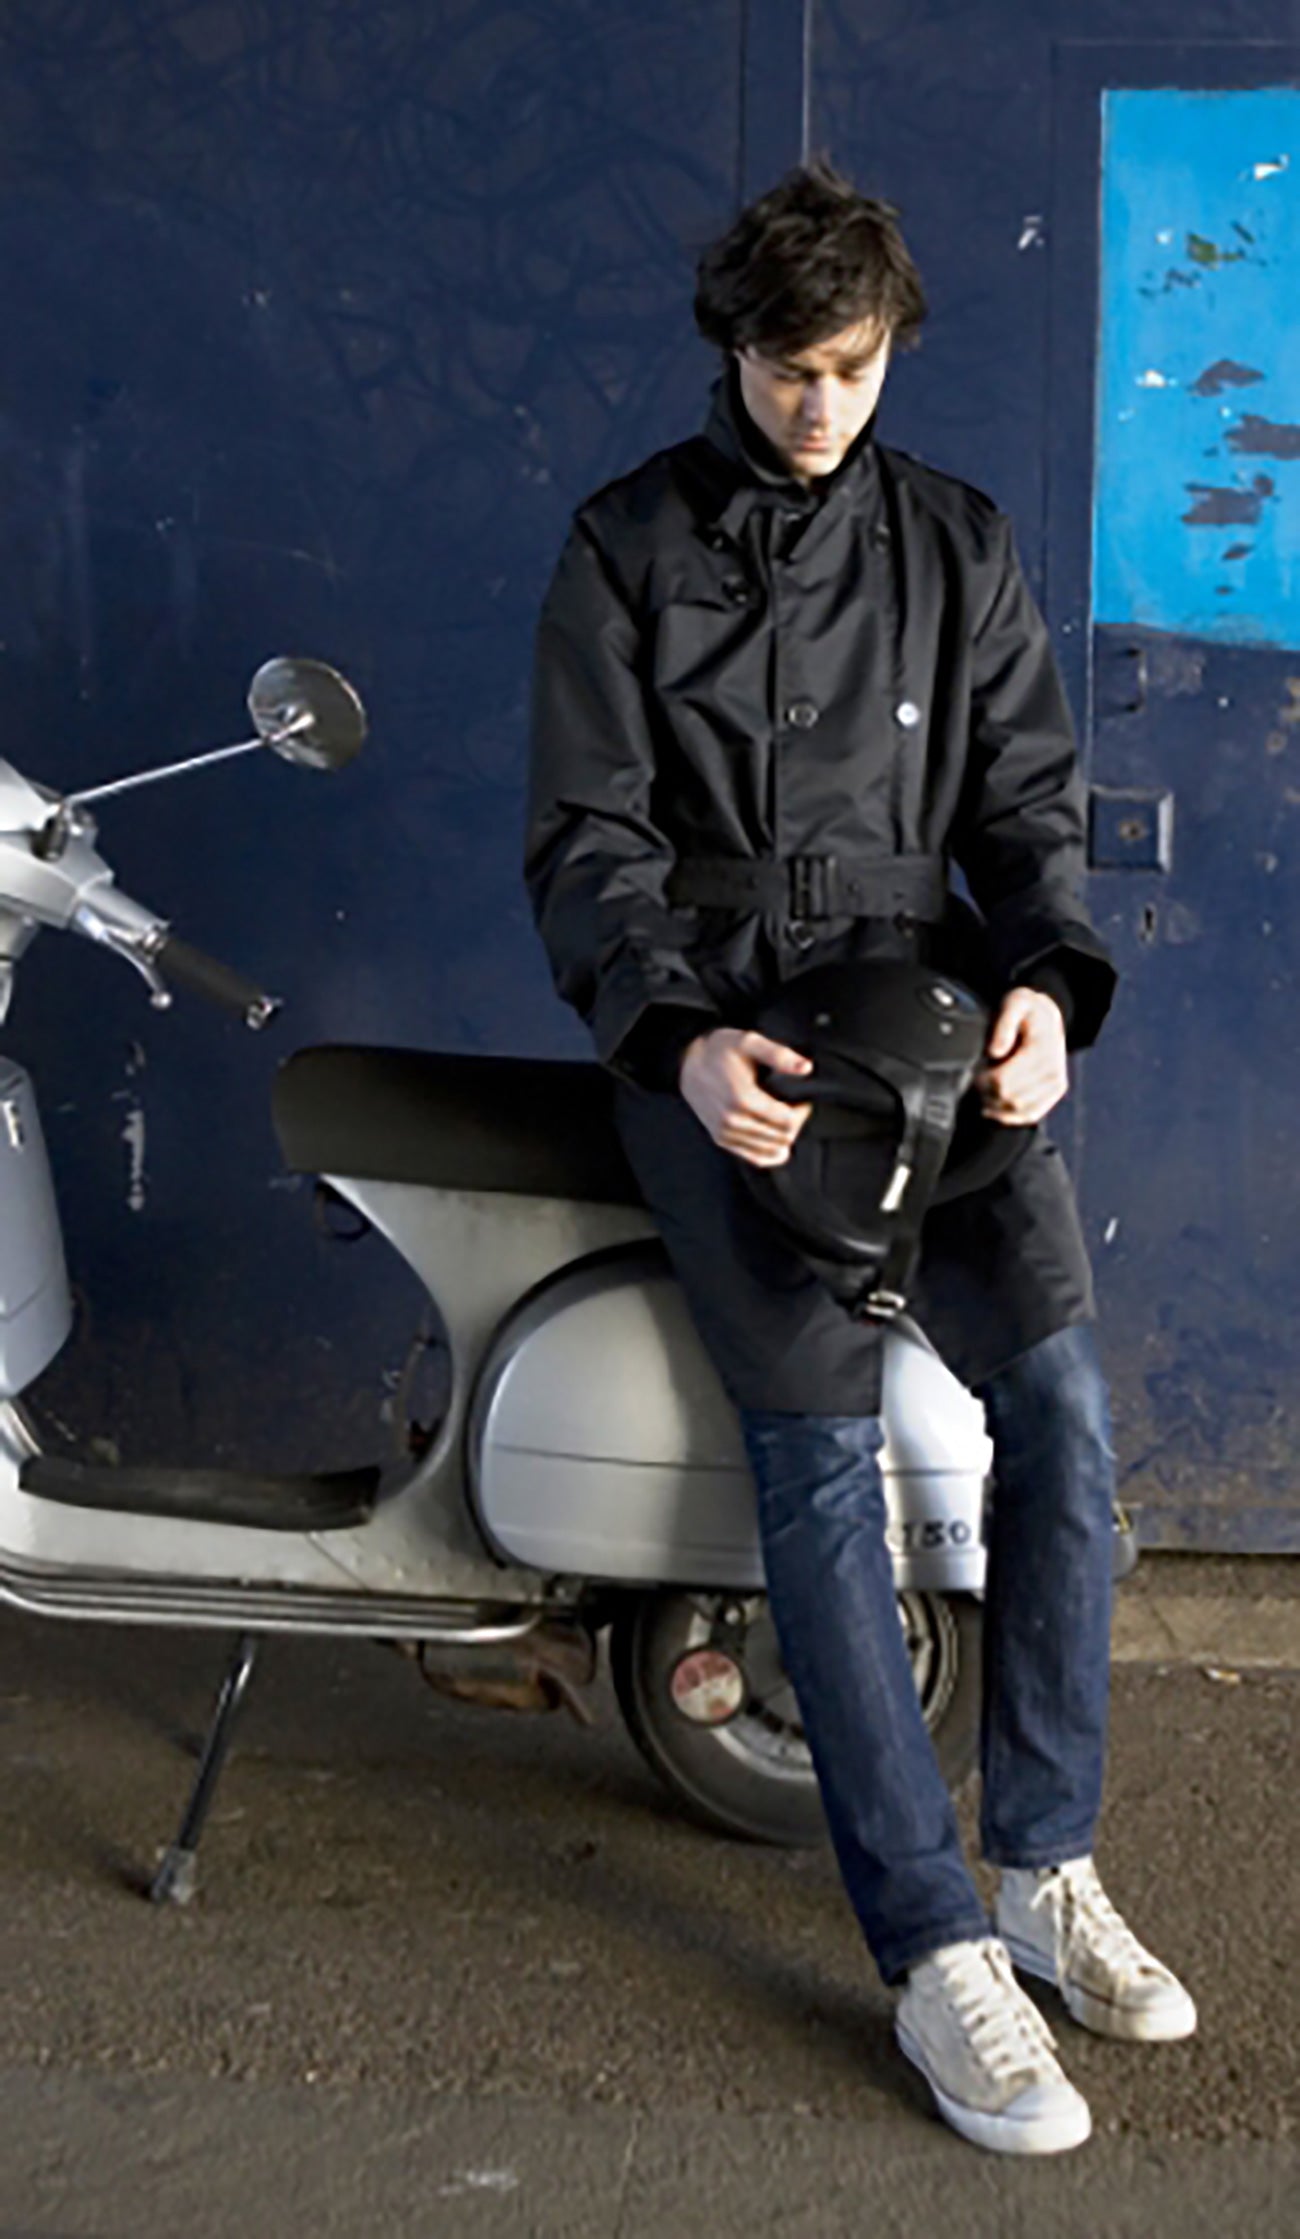 Men's Mac - Mac - Men's jacket - jacket - motorcycle jacket - moped jacket - moped - scooter - scoota - scooter jacket - motorbike jacket - Melbourne Scooter Warehouse - black jacket - trench - Armadillo Scooterwear